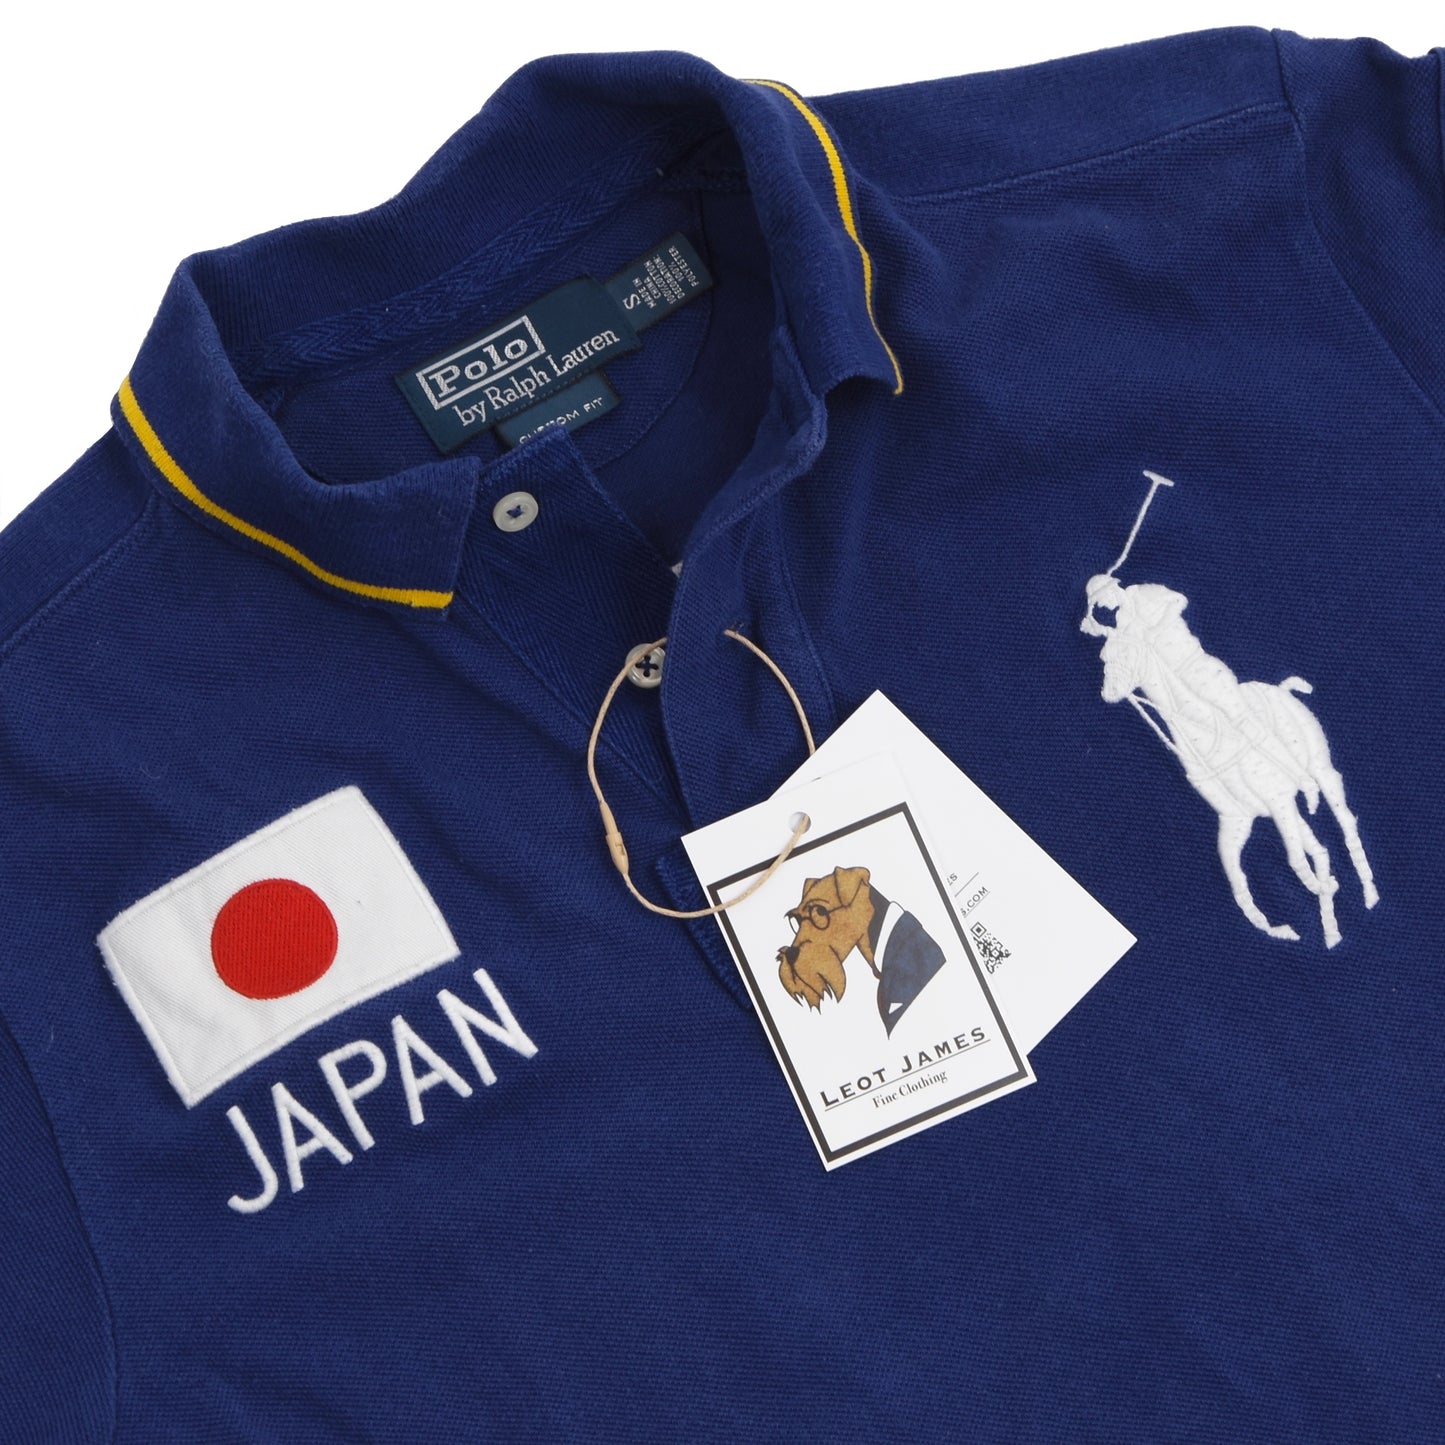 Polo Ralph Lauren Custom Fit Poloshirt Größe S - Japan